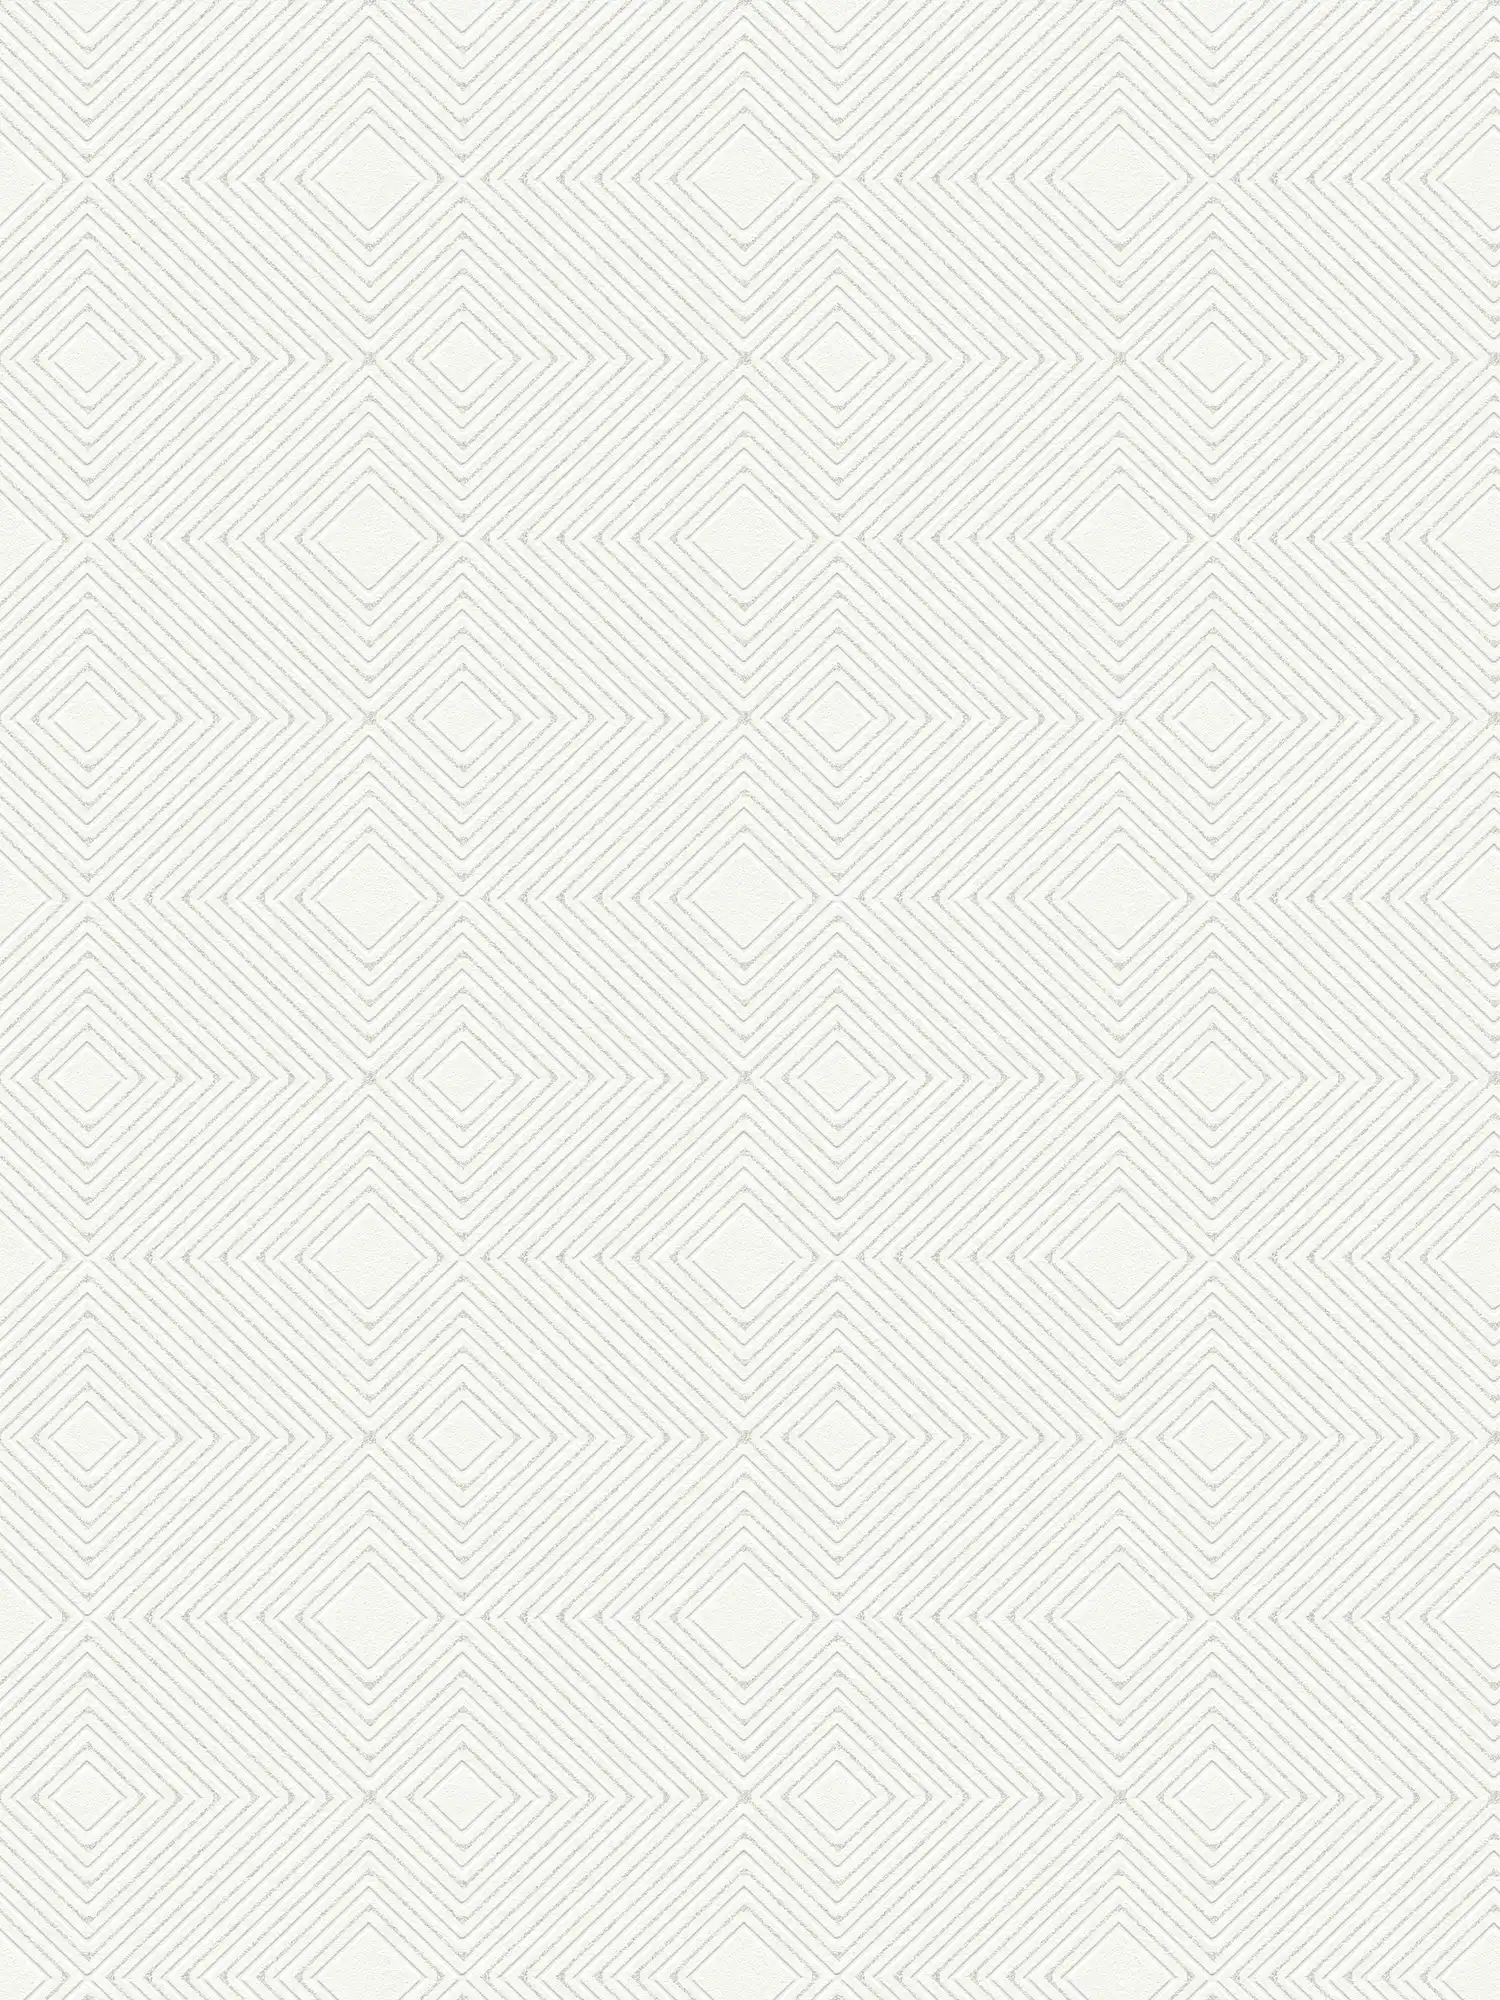 Wallpaper with geometric pattern & metallic effect - white
